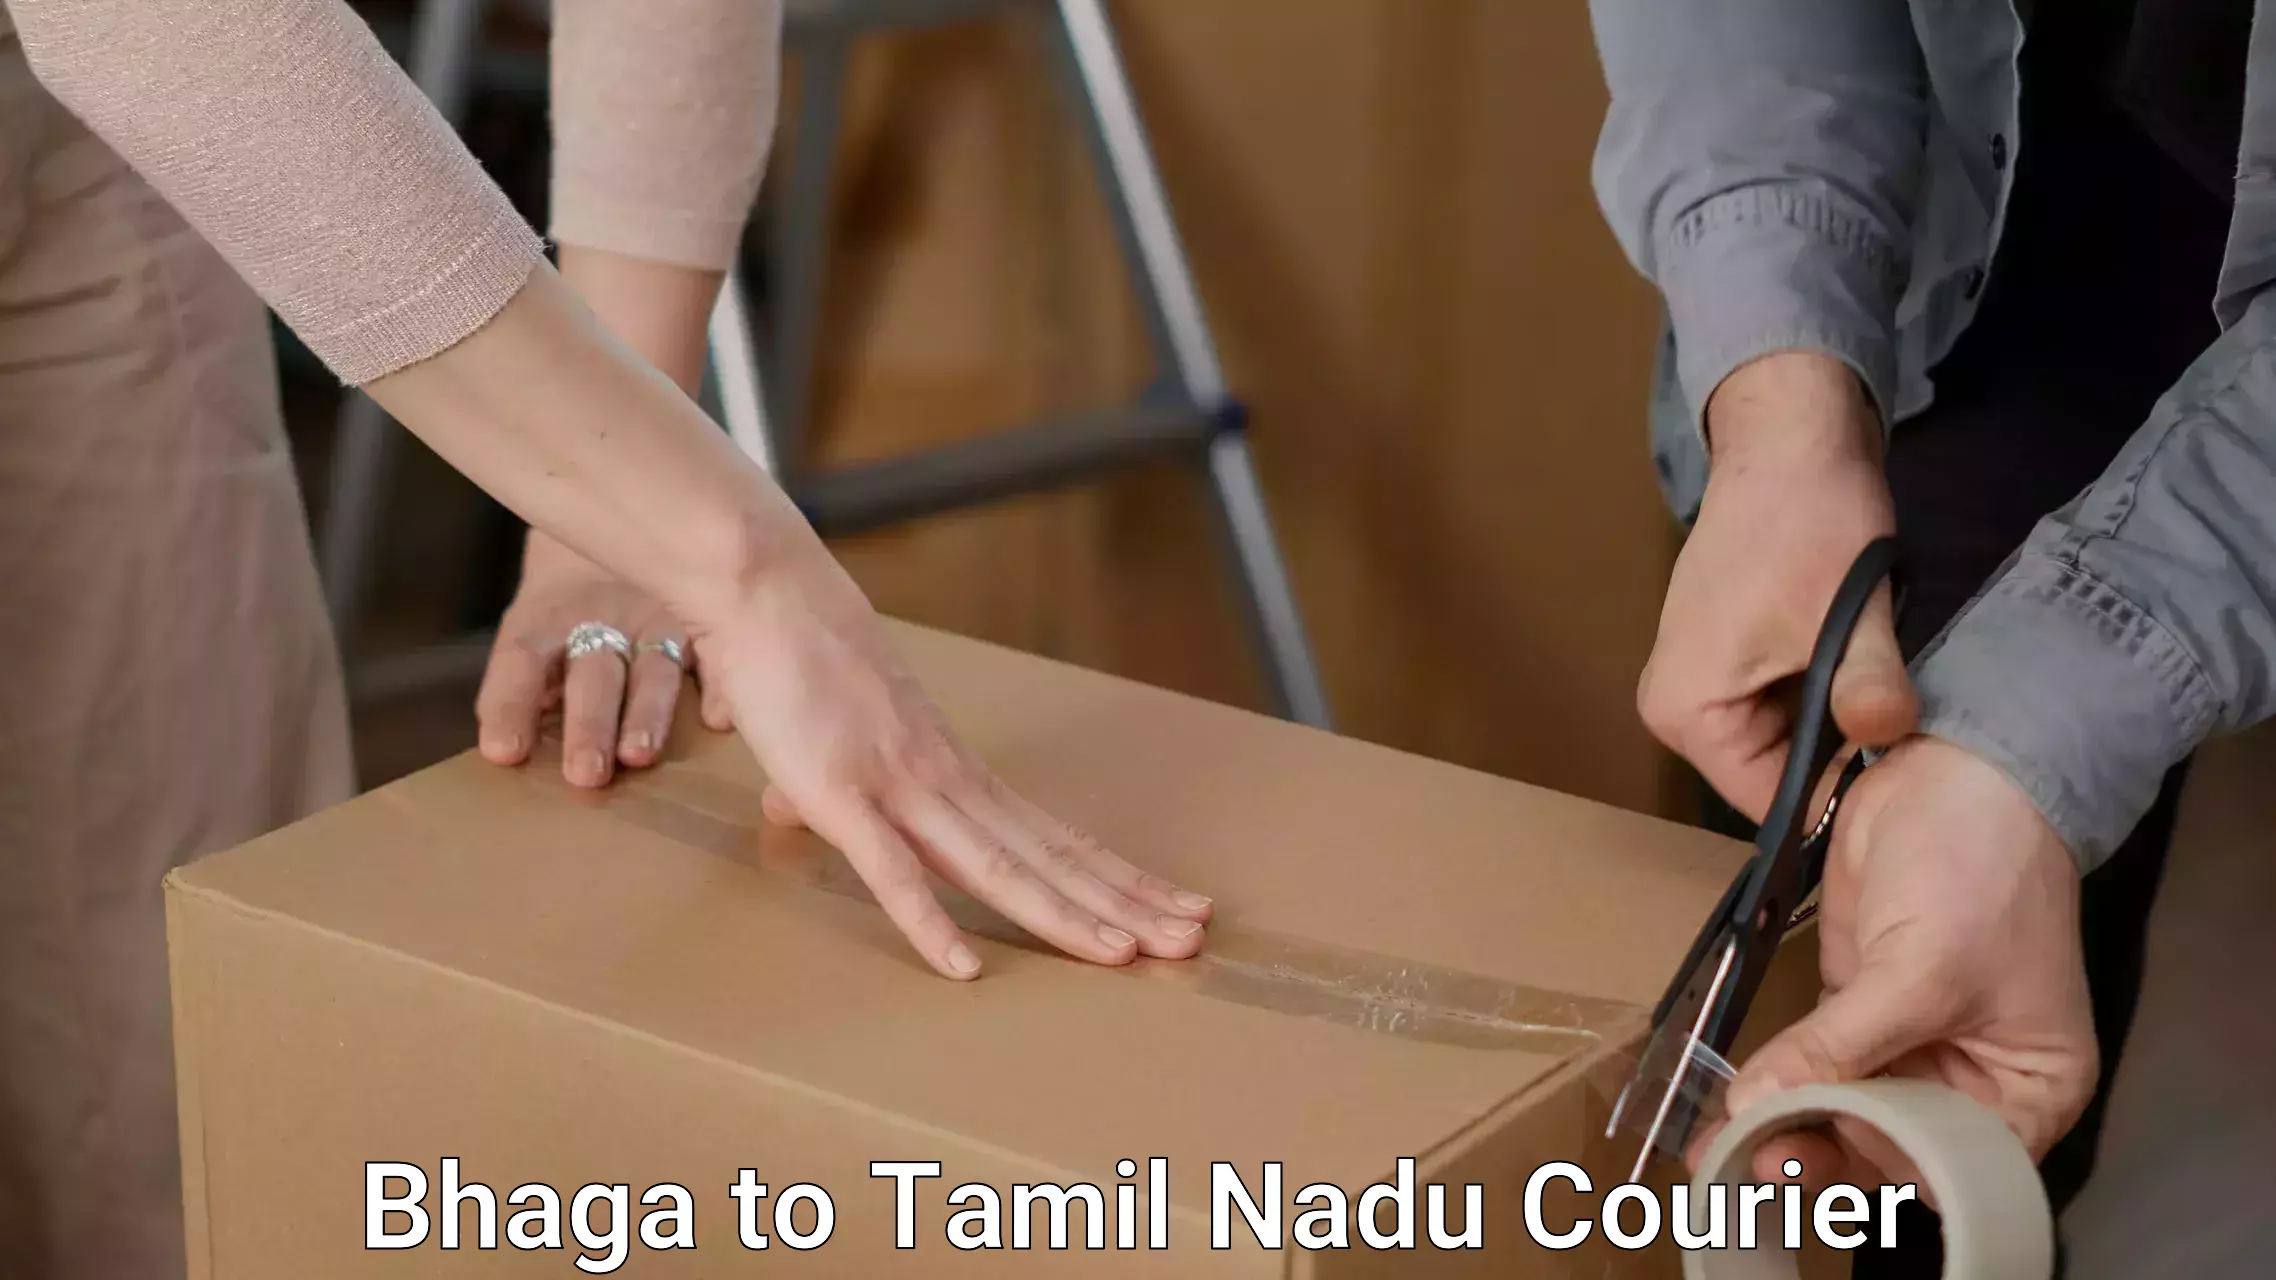 Furniture delivery service Bhaga to Tamil Nadu